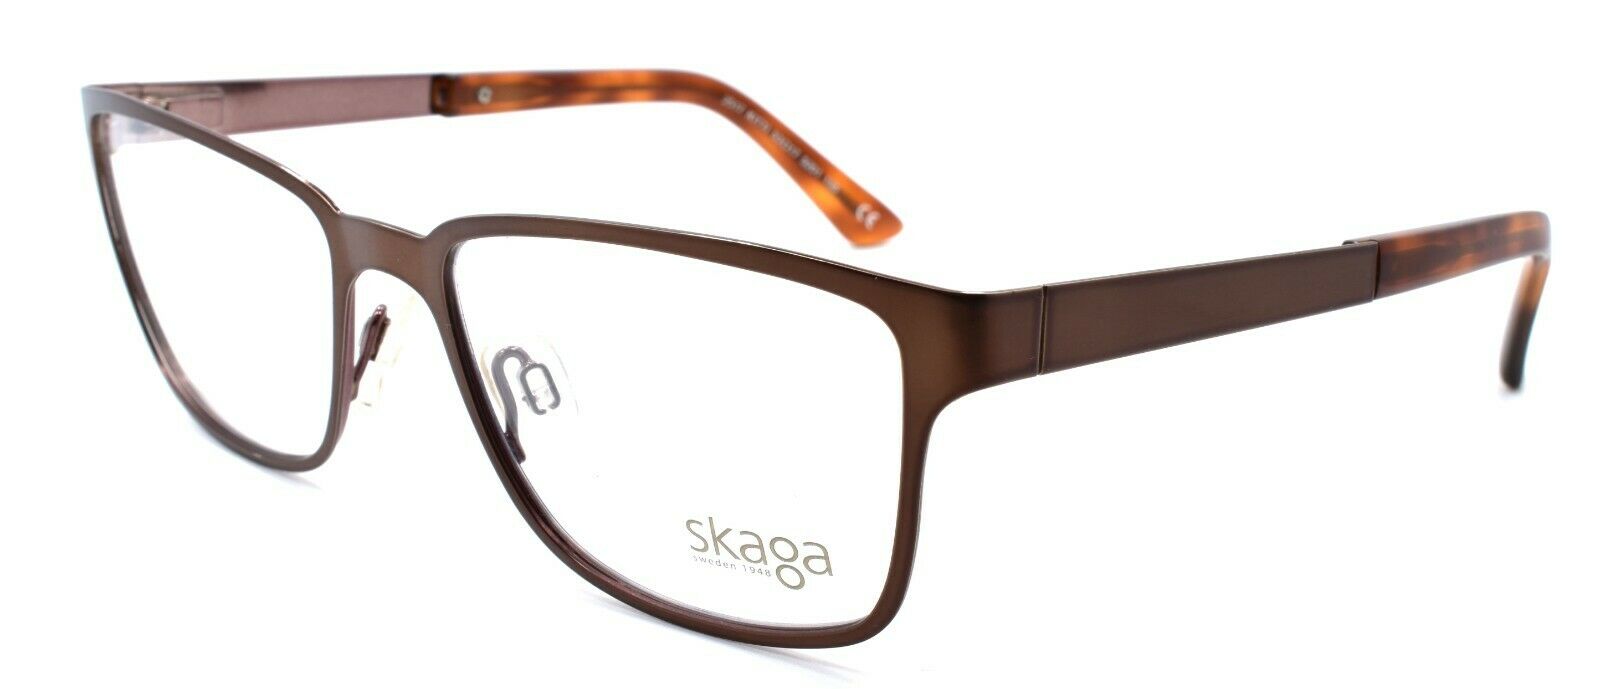 1-Skaga 2517 Kitti 5201 Women's Eyeglasses Frames 53-17-135 Brown-IKSpecs